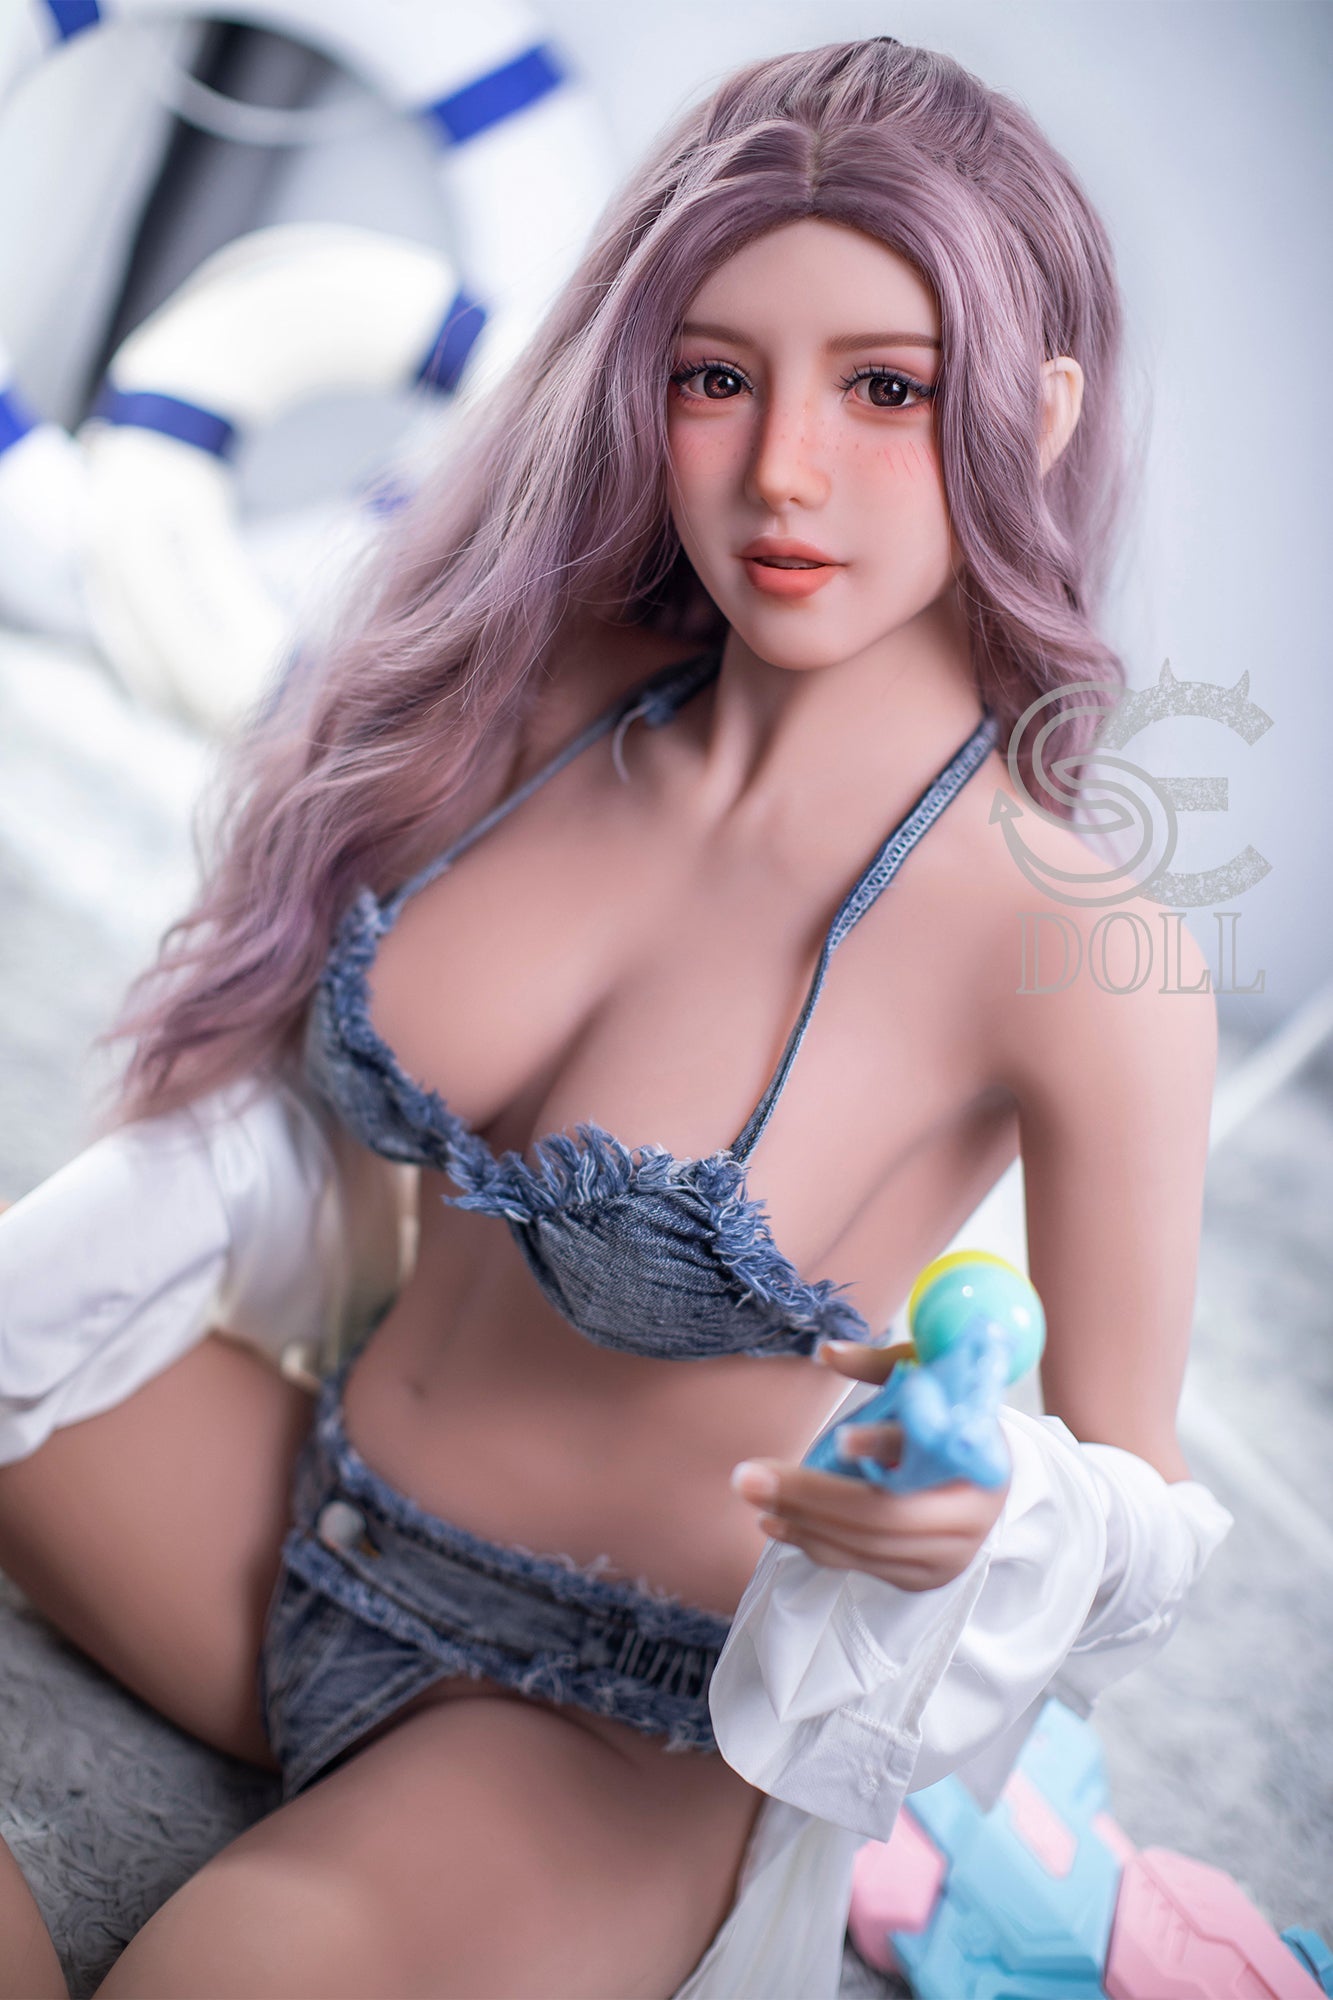 SE Doll - 163 cm E Cup TPE Doll - Yasmin (5ft 4in) - Love Dolls 4U